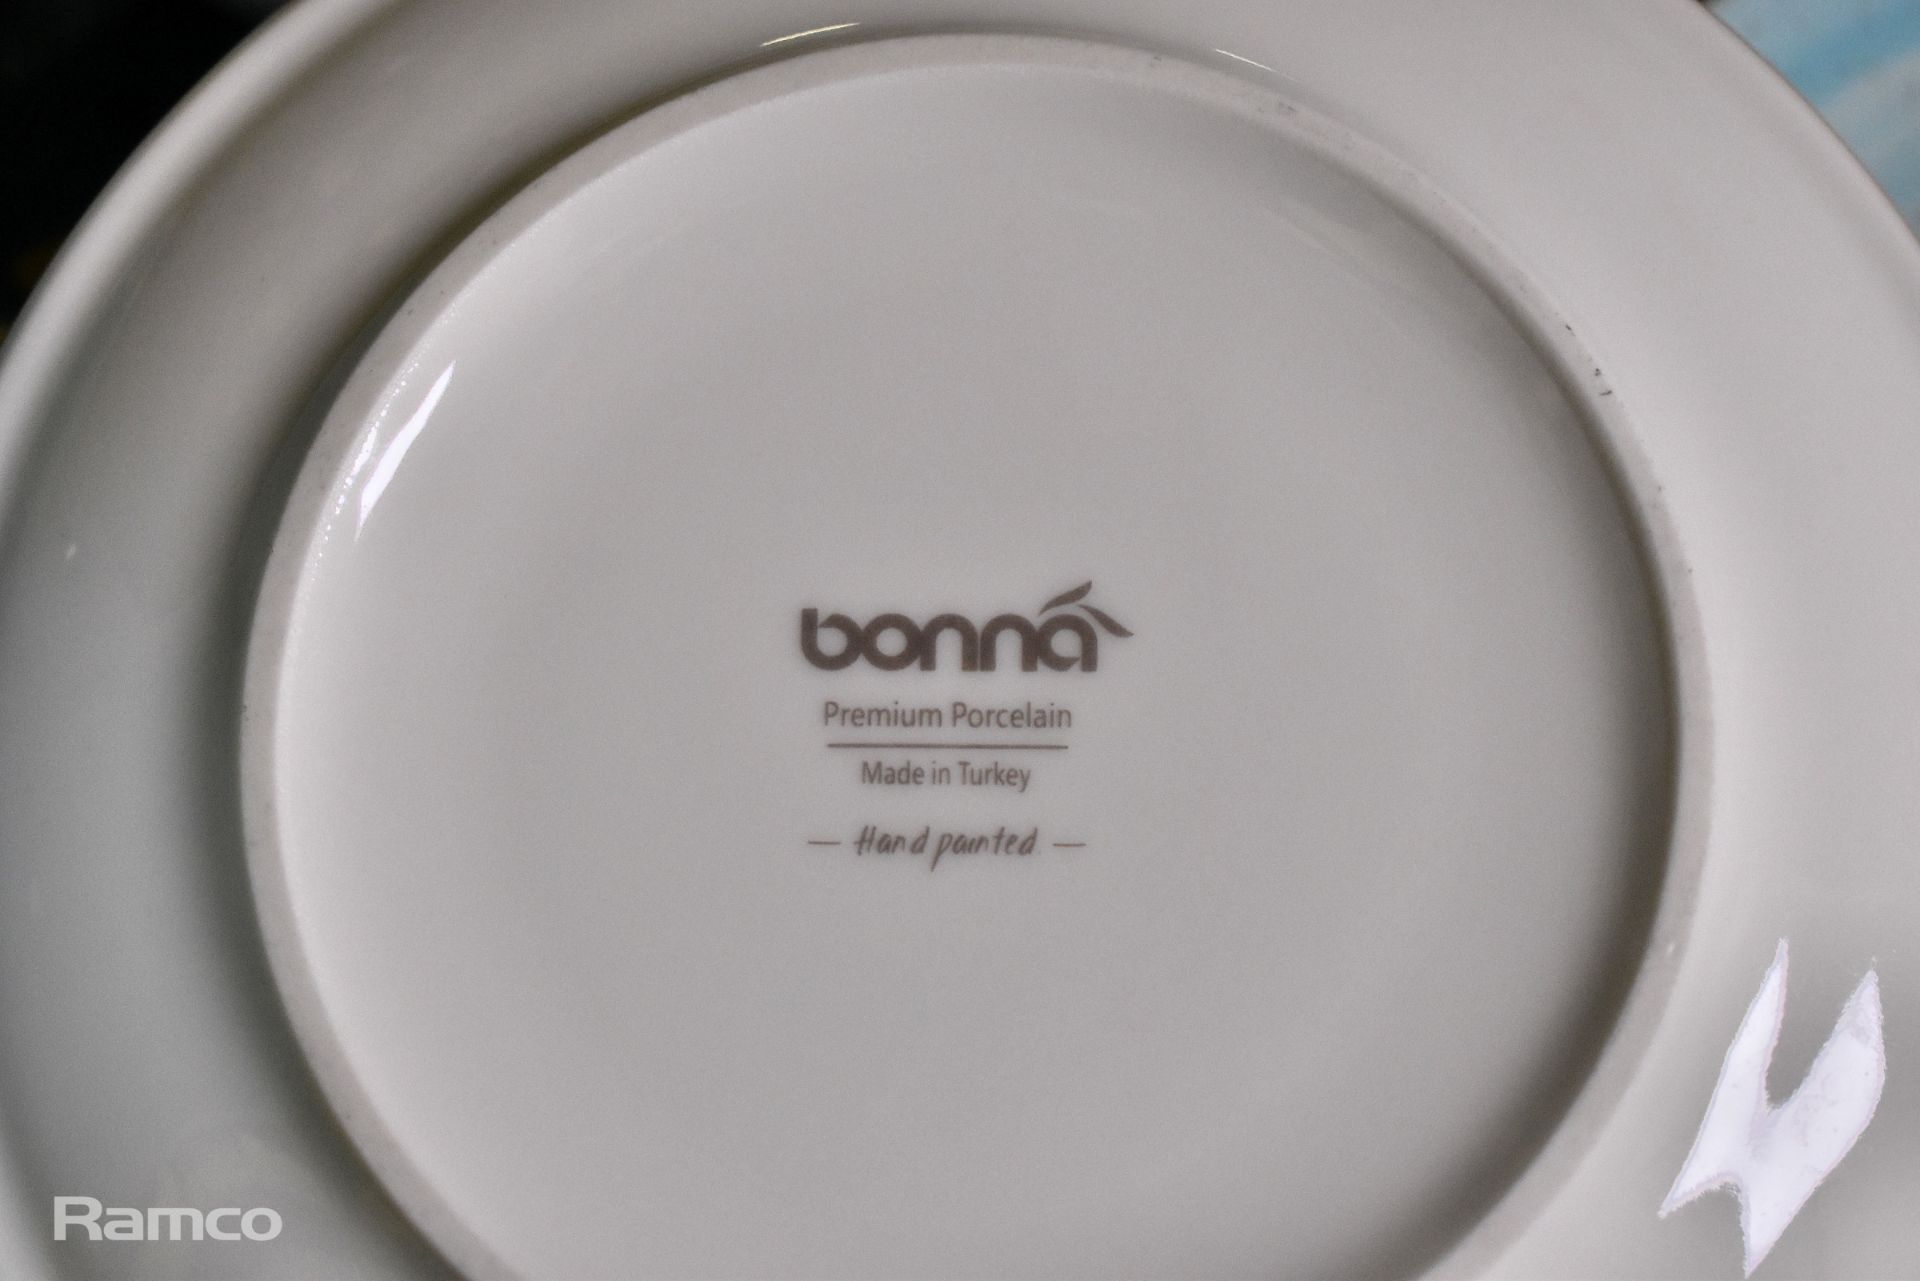 Bonna Premium Porcelain Aura Aqua crockery set: cups, saucers, plates and bowls - Image 4 of 4